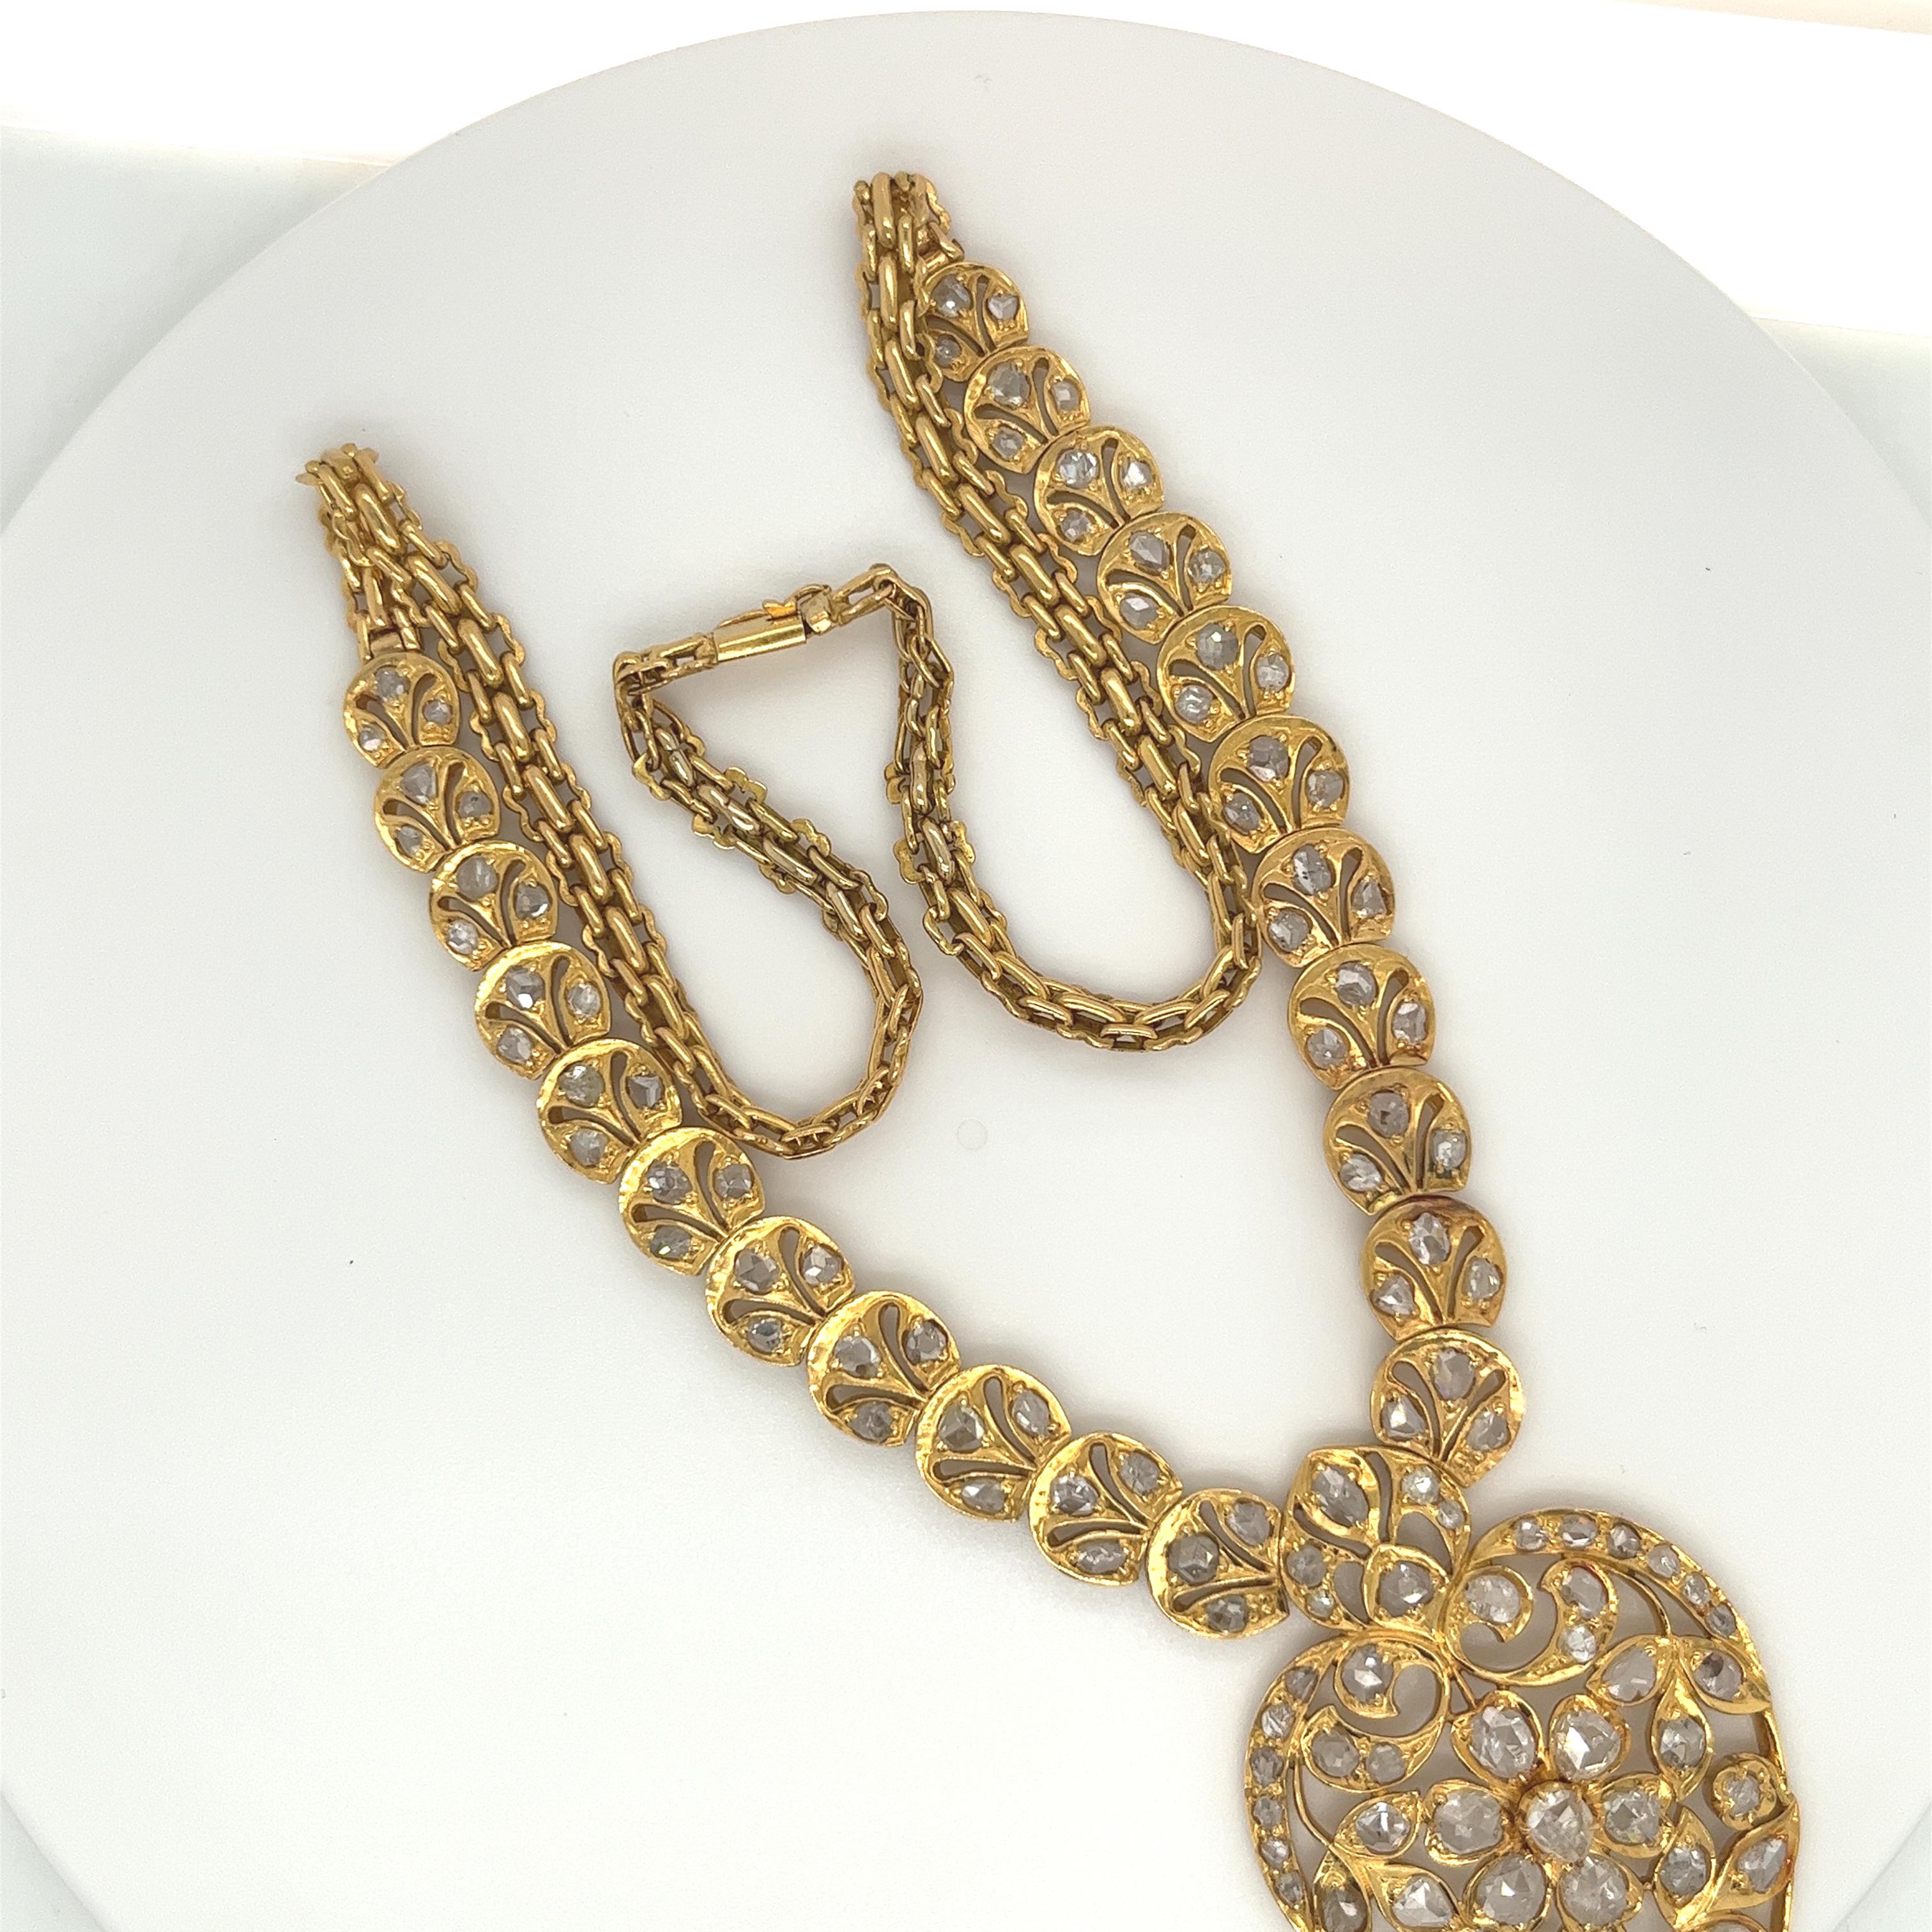 25 carat gold necklace